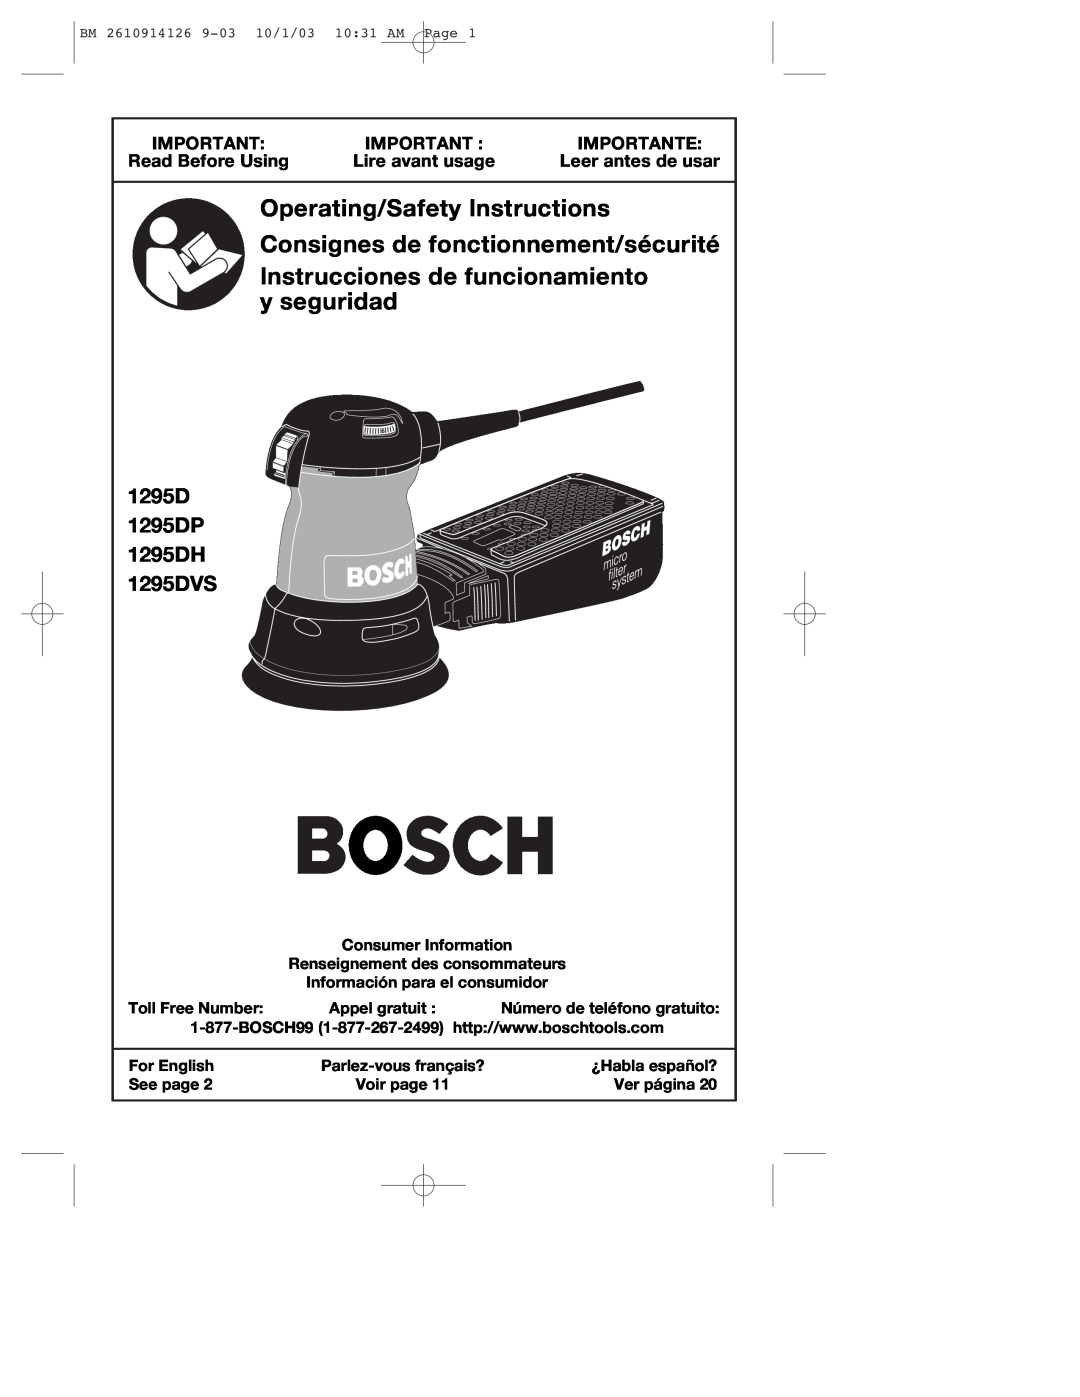 Bosch Power Tools manual 1295D 1295DP 1295DH 1295DVS, Importante, Read Before Using, Lire avant usage 